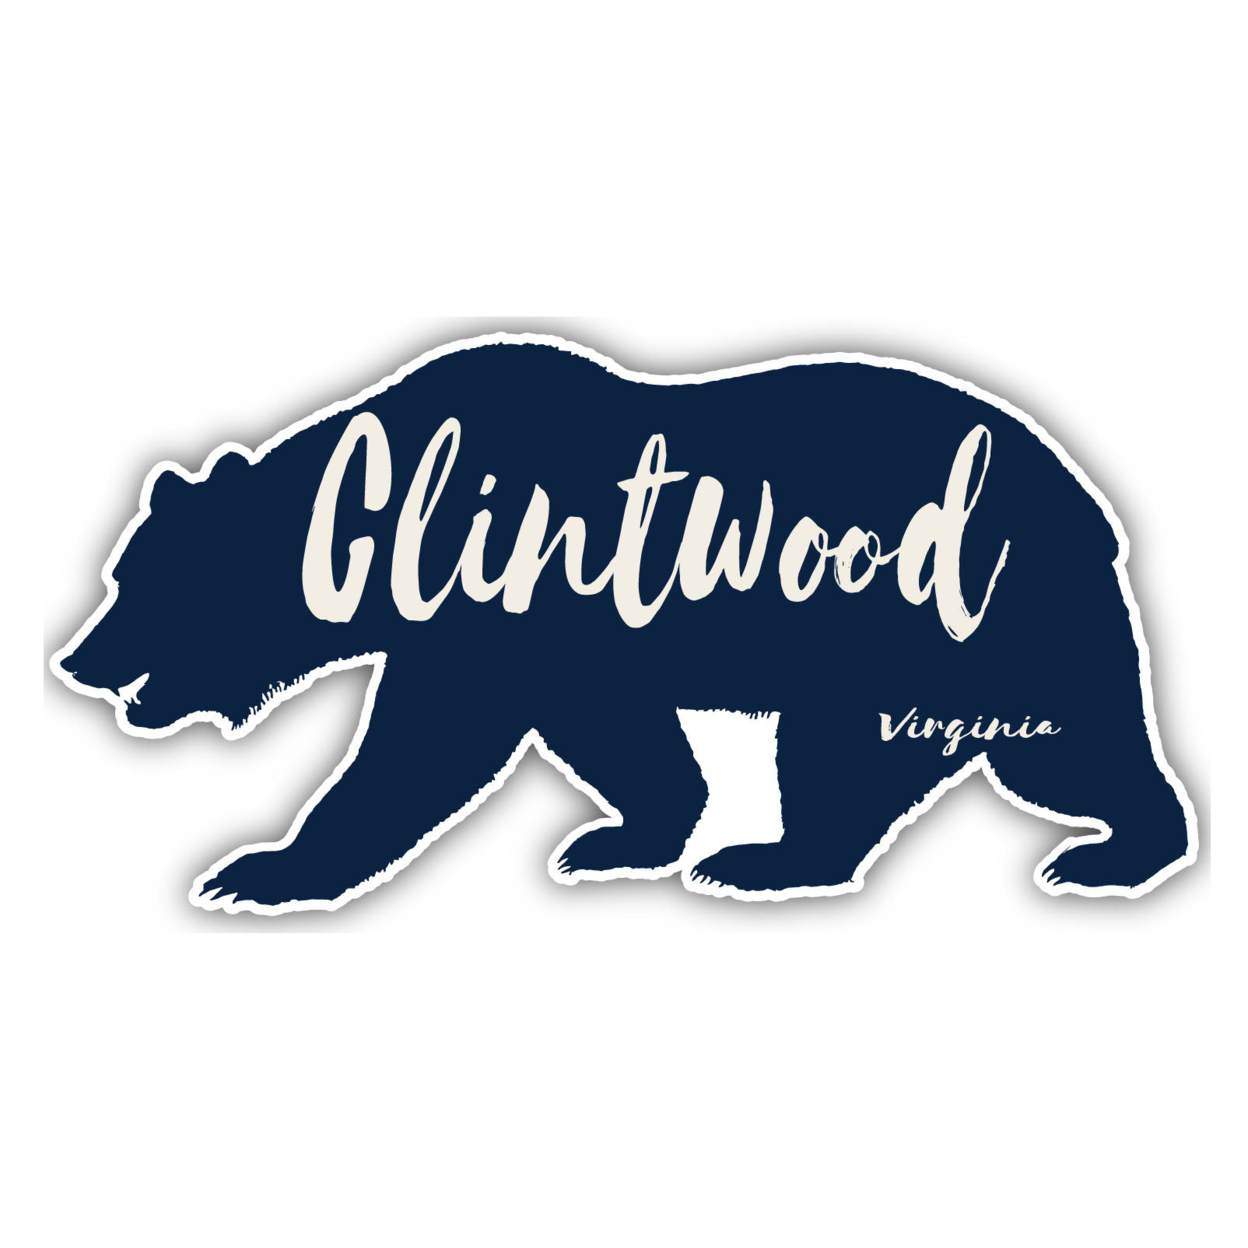 Clintwood Virginia Souvenir Decorative Stickers (Choose Theme And Size) - Single Unit, 4-Inch, Bear